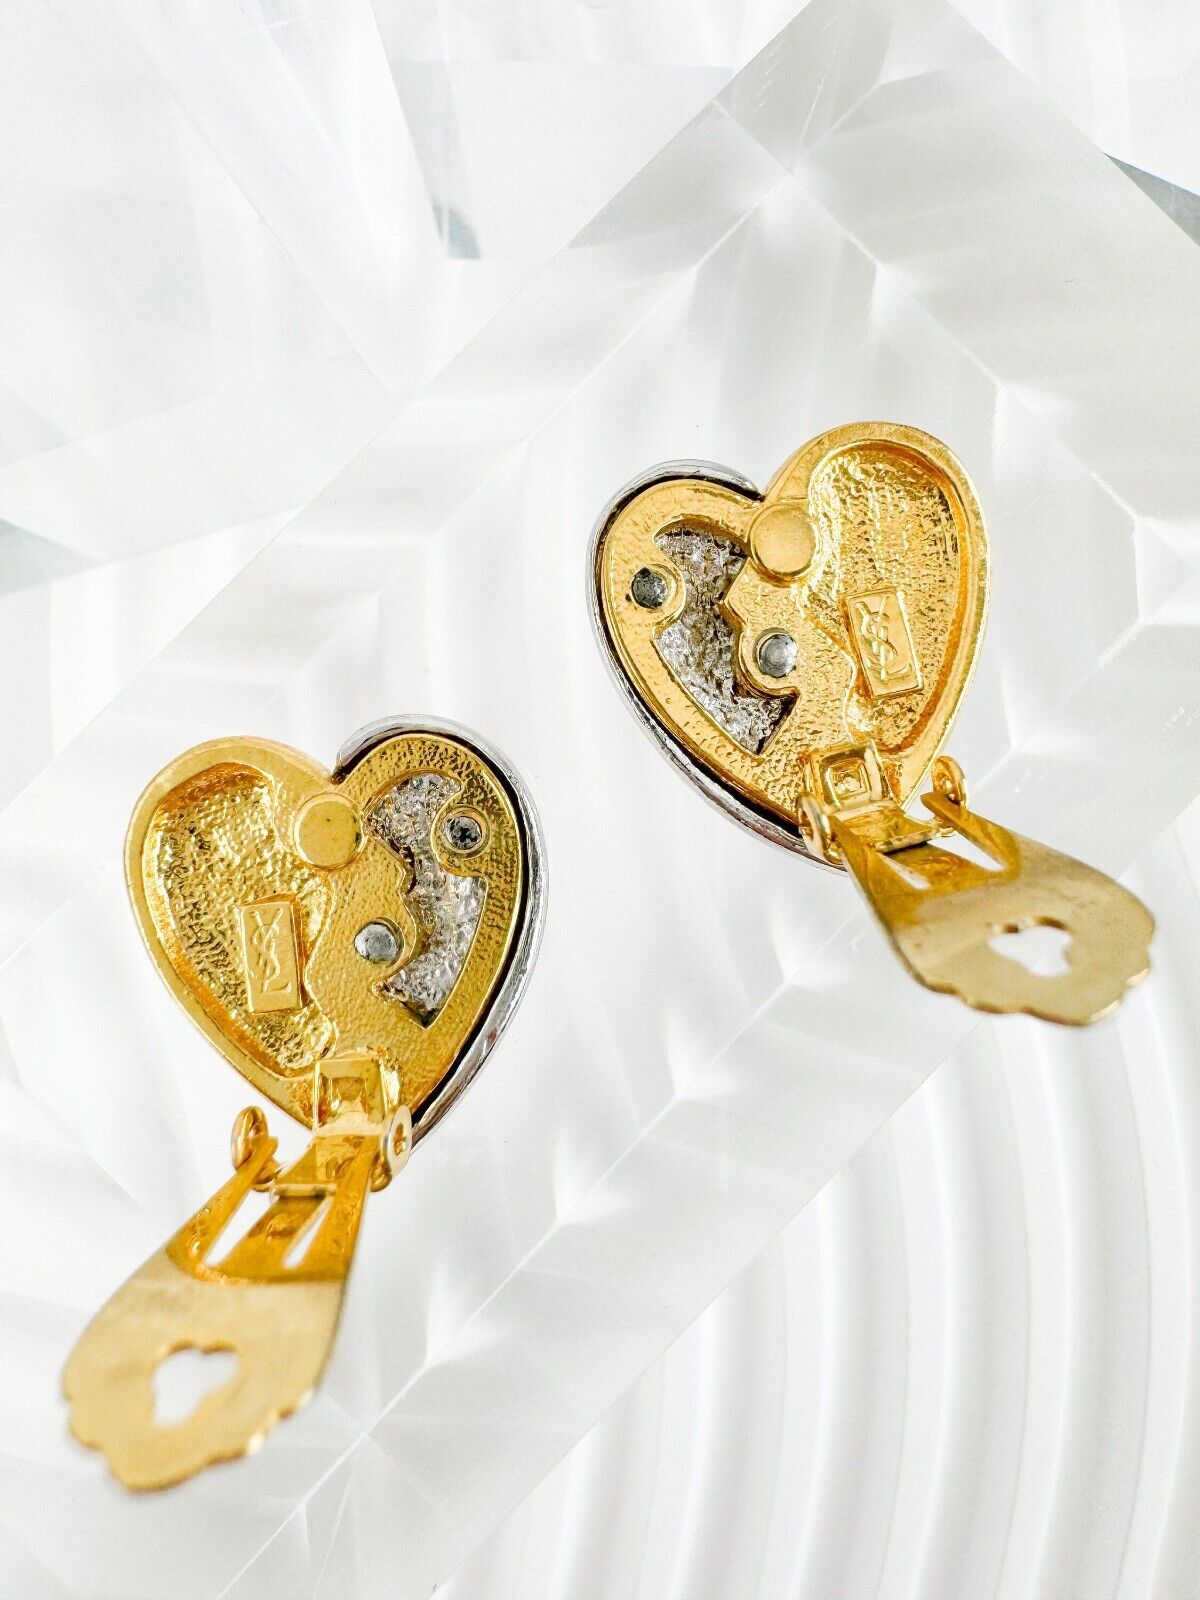 YSL Yves Saint Laurent Earrings Broken Heart, Beautiful Gold & Silver Broken Heart Earrings, Swarovski Crystals, Vintage Earrings Gold